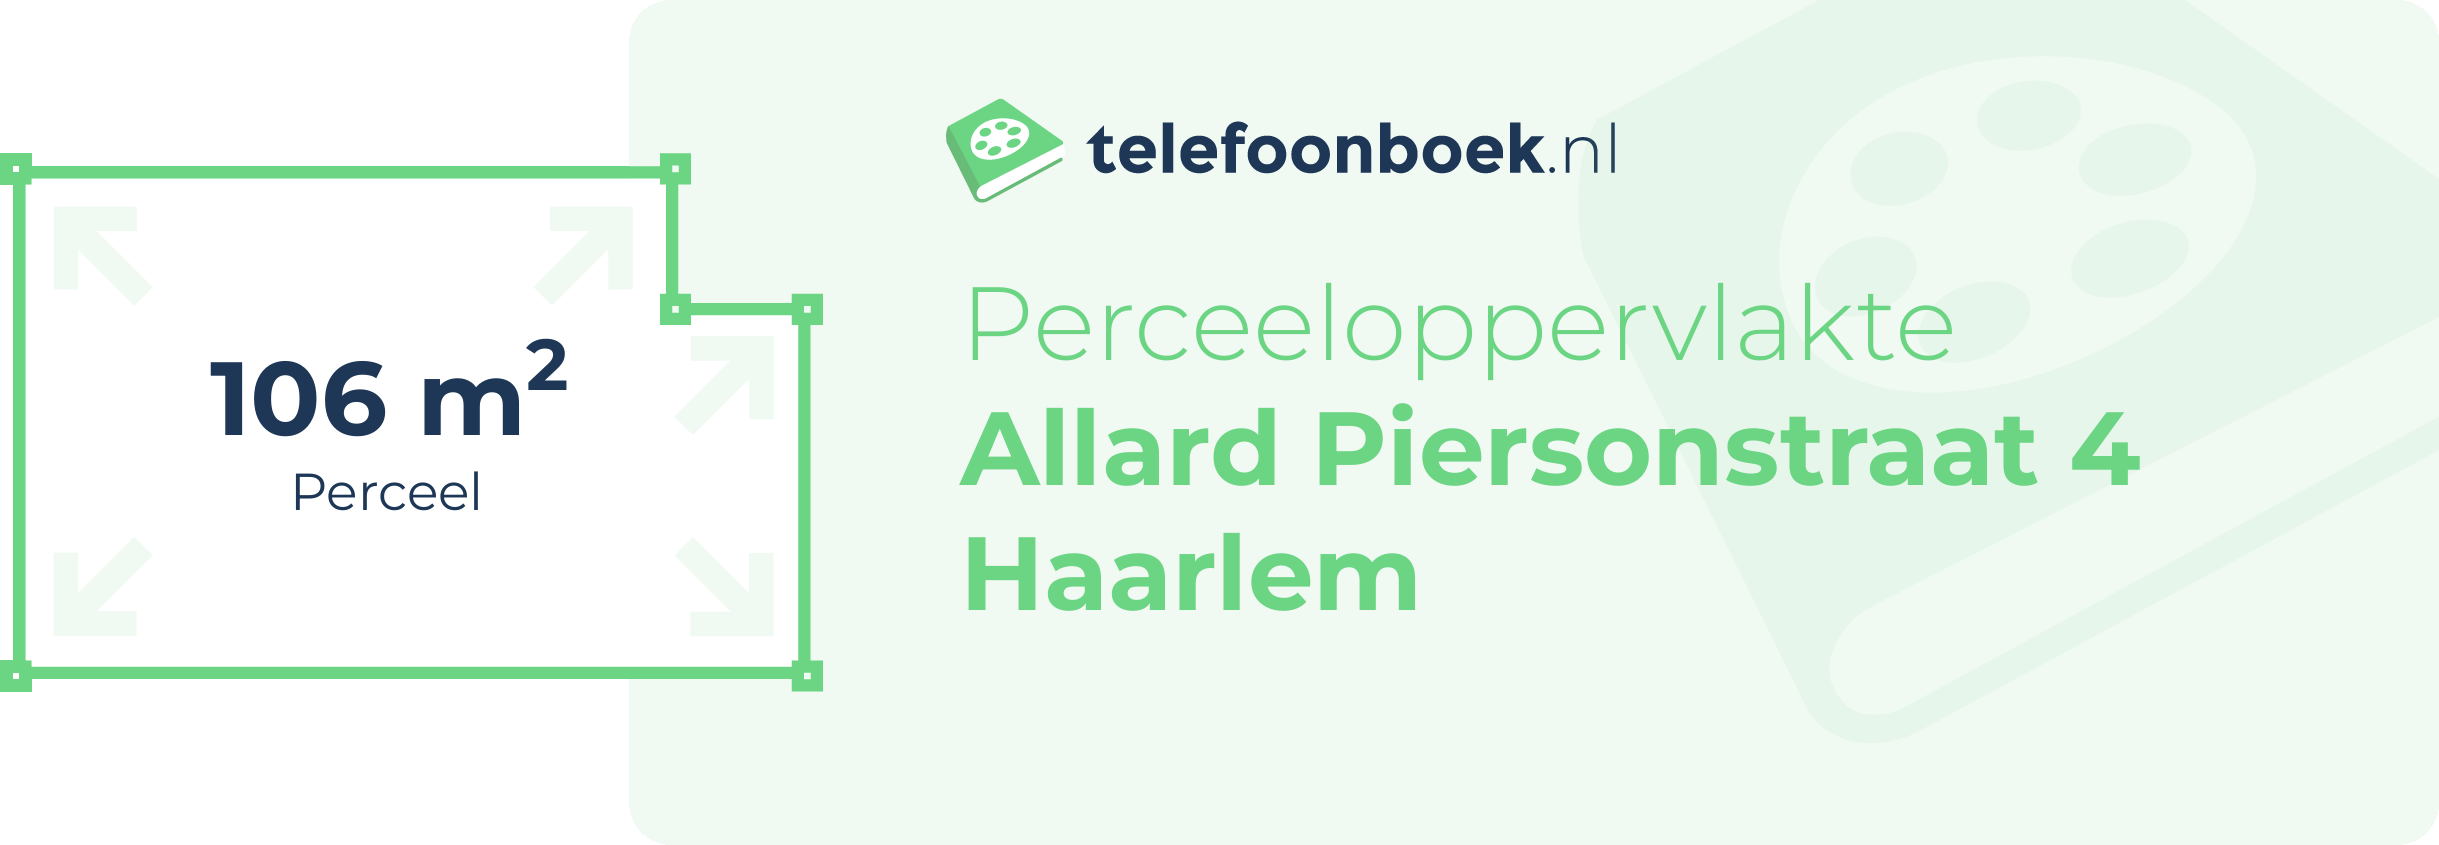 Perceeloppervlakte Allard Piersonstraat 4 Haarlem